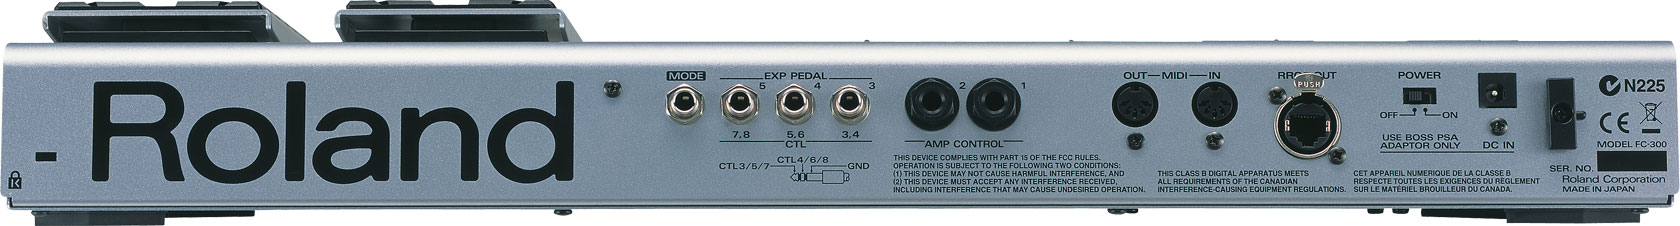 Roland - FC-300 | MIDI Foot Controller